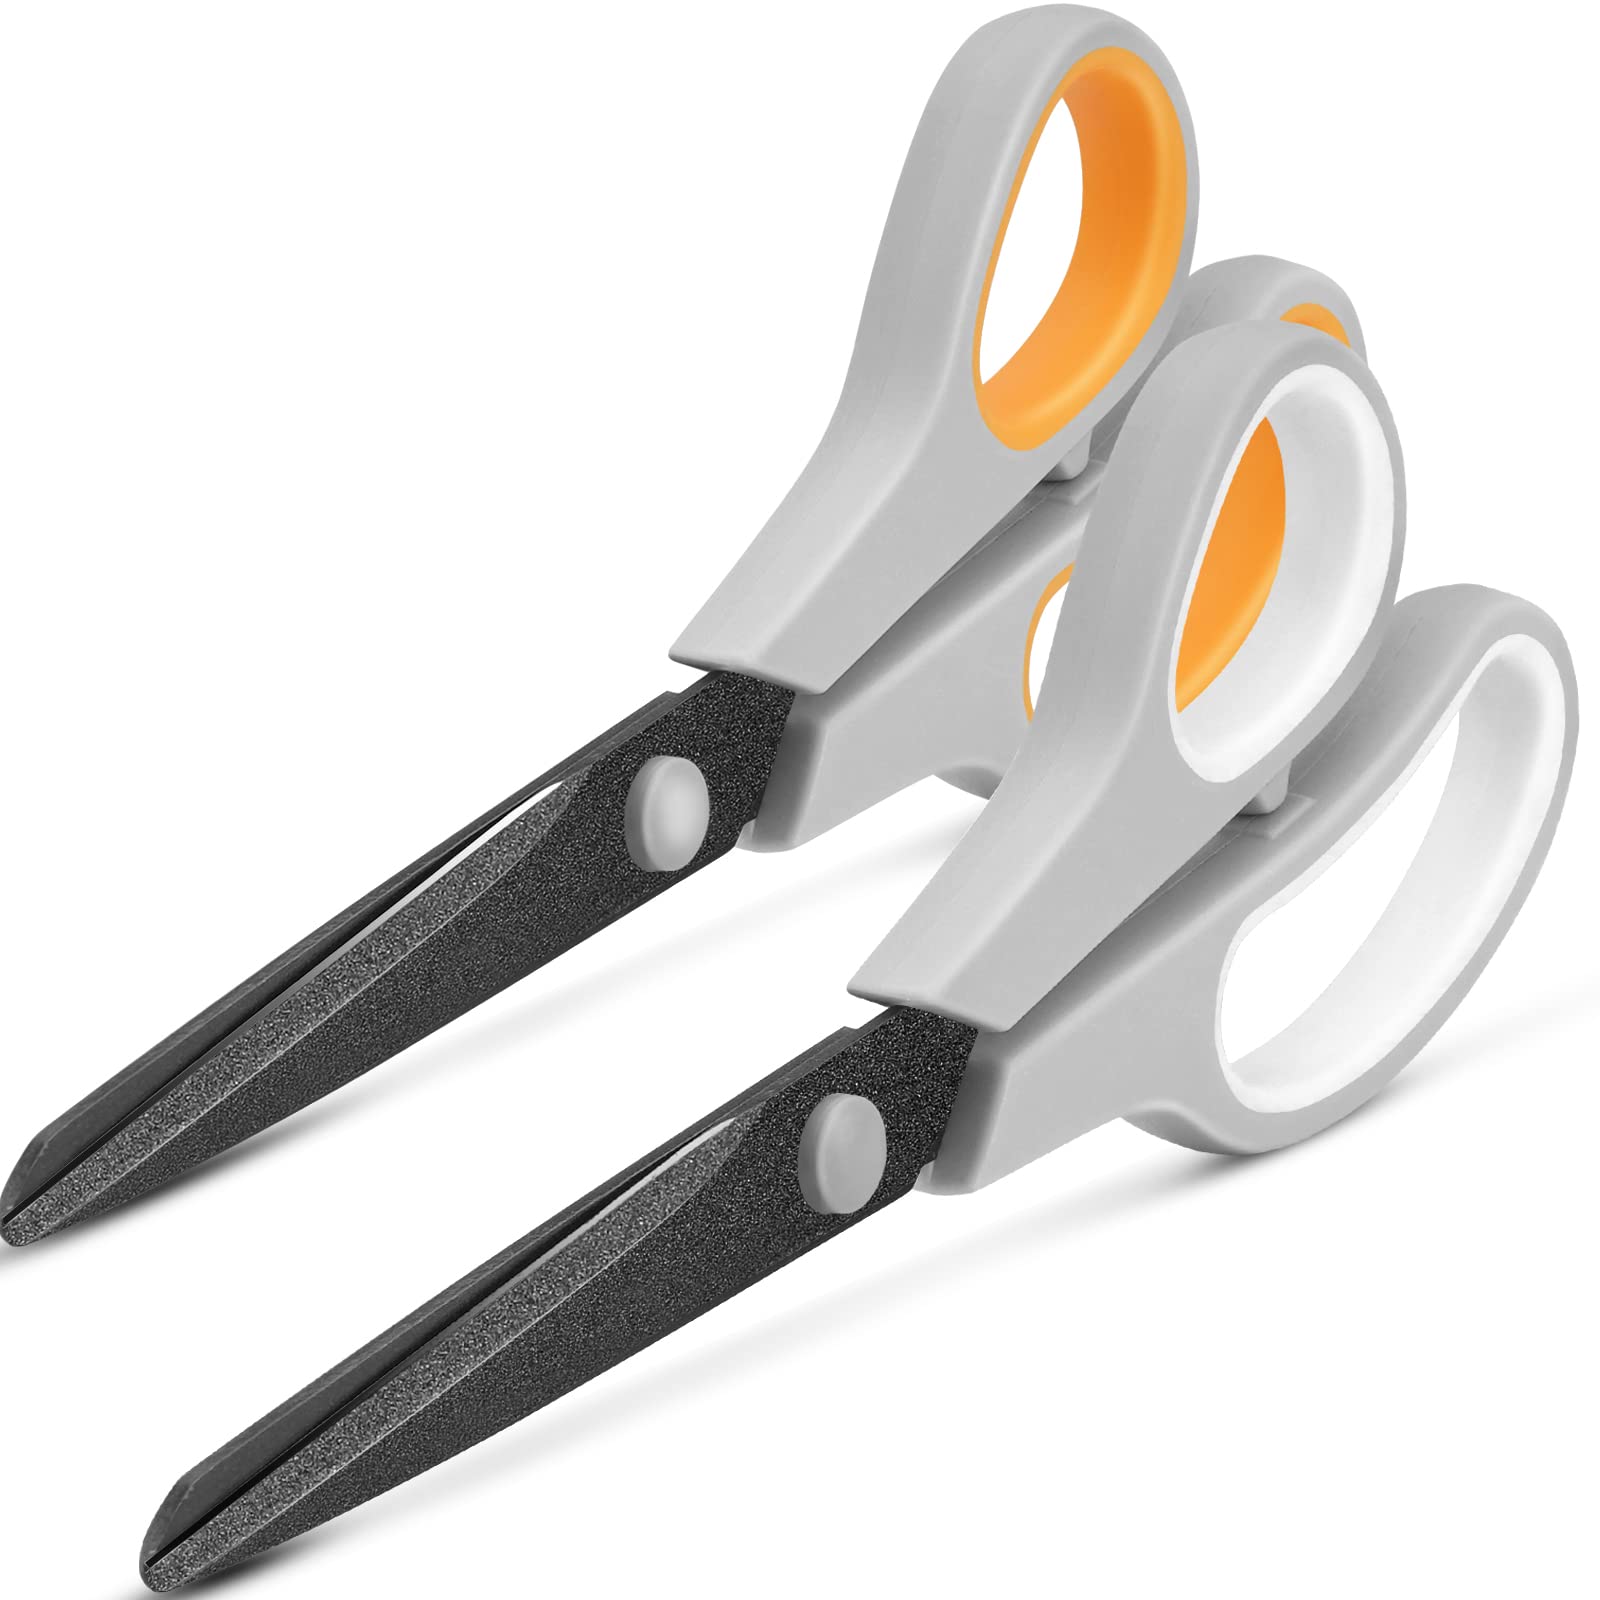 2 Pack 8 inch Scissors Forvencer Non-Stick Titanium Scissors Sharp Heavy  Duty Scissors with Comfort Grip All-Purpose Scissors for Kitchen Home  School Office Craft Scissors for Art DIY 2 Grey/White & Grey/Orange